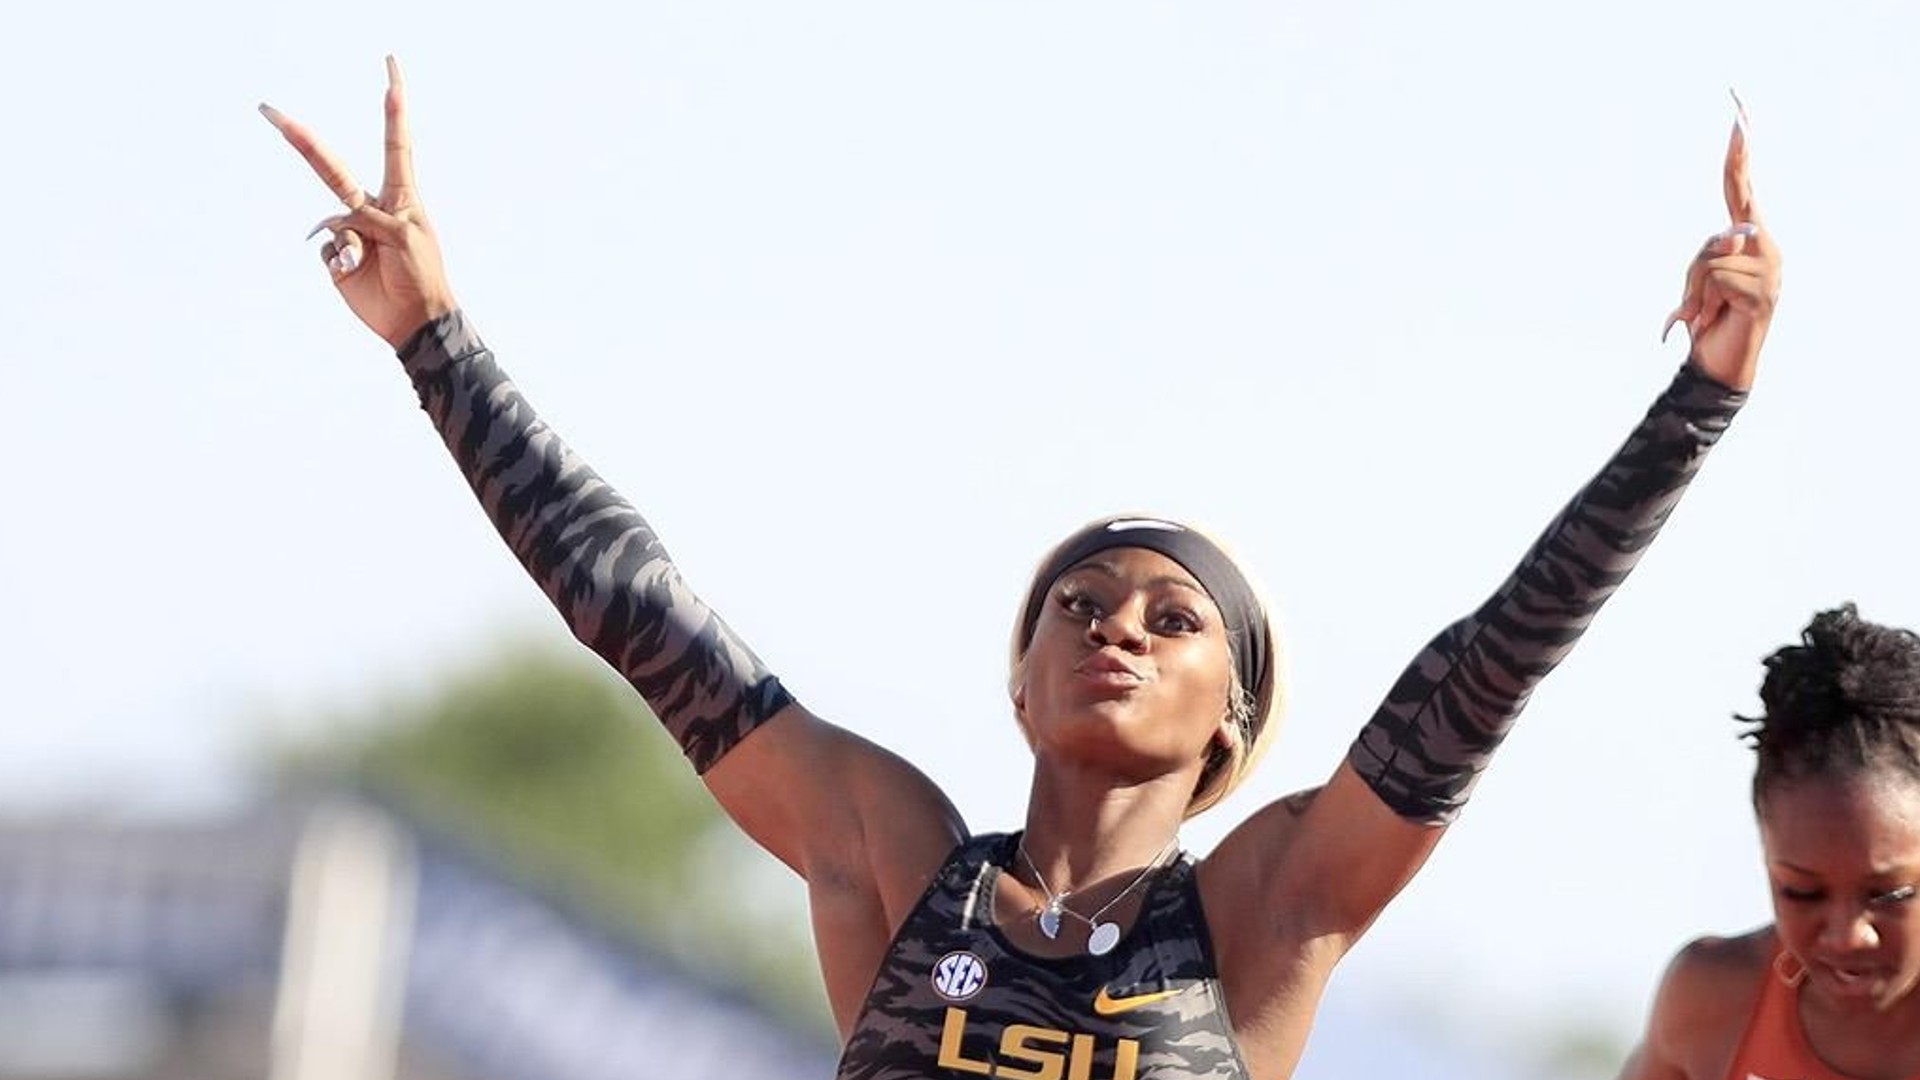 Sha'Carri Richardson after winning the 100m at the NCAA Championships 2021 (Image Credits - World Athletics)